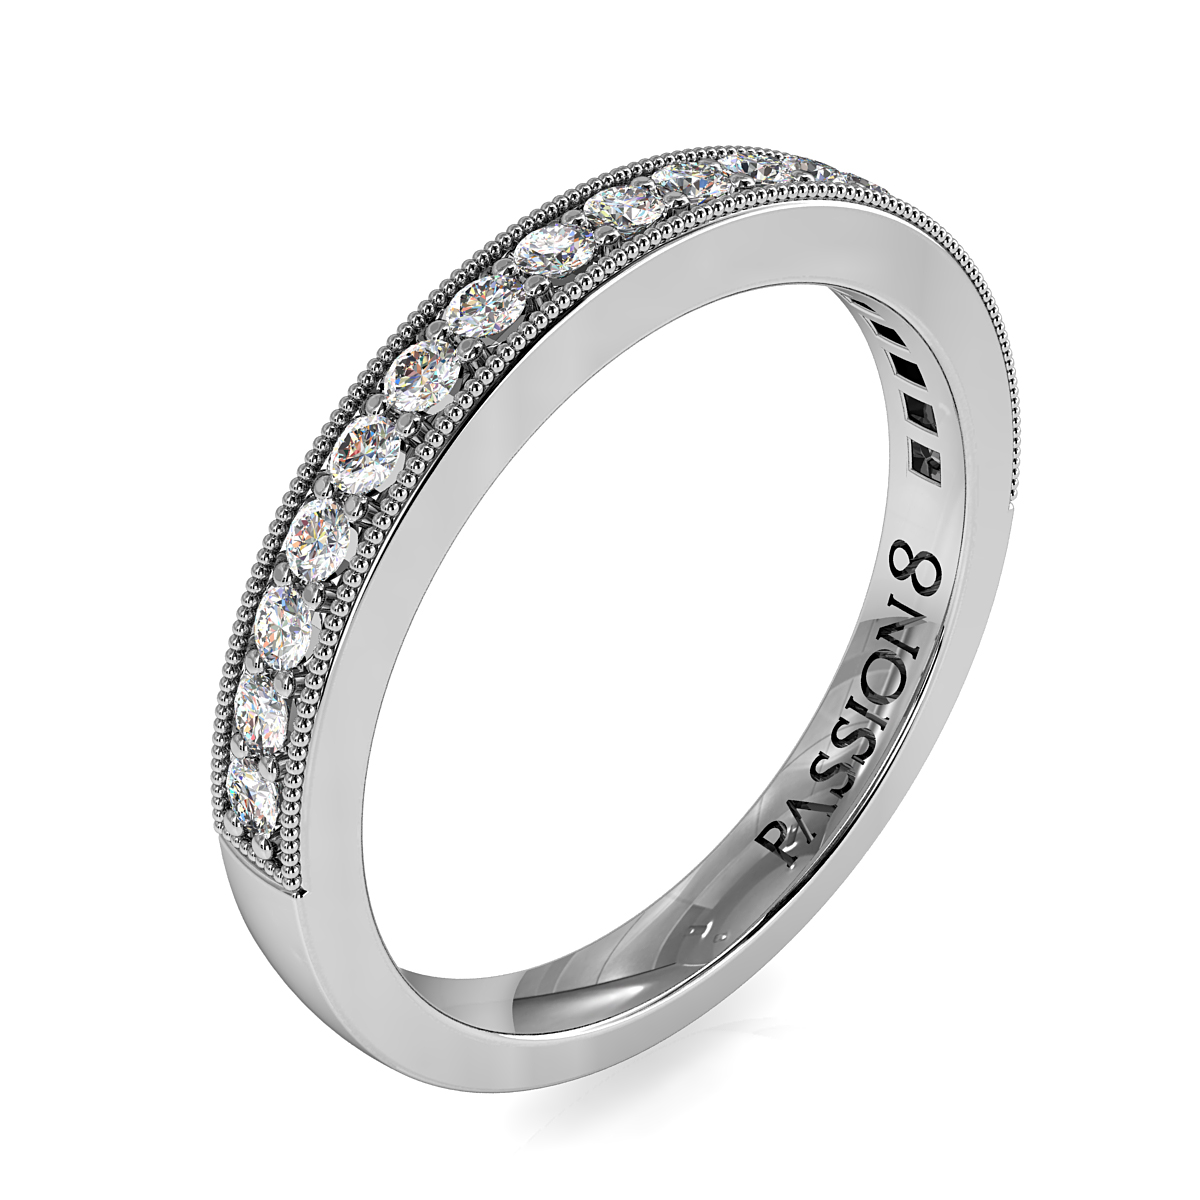 Wedding Rings â€“ Traditional or Diamond Set?